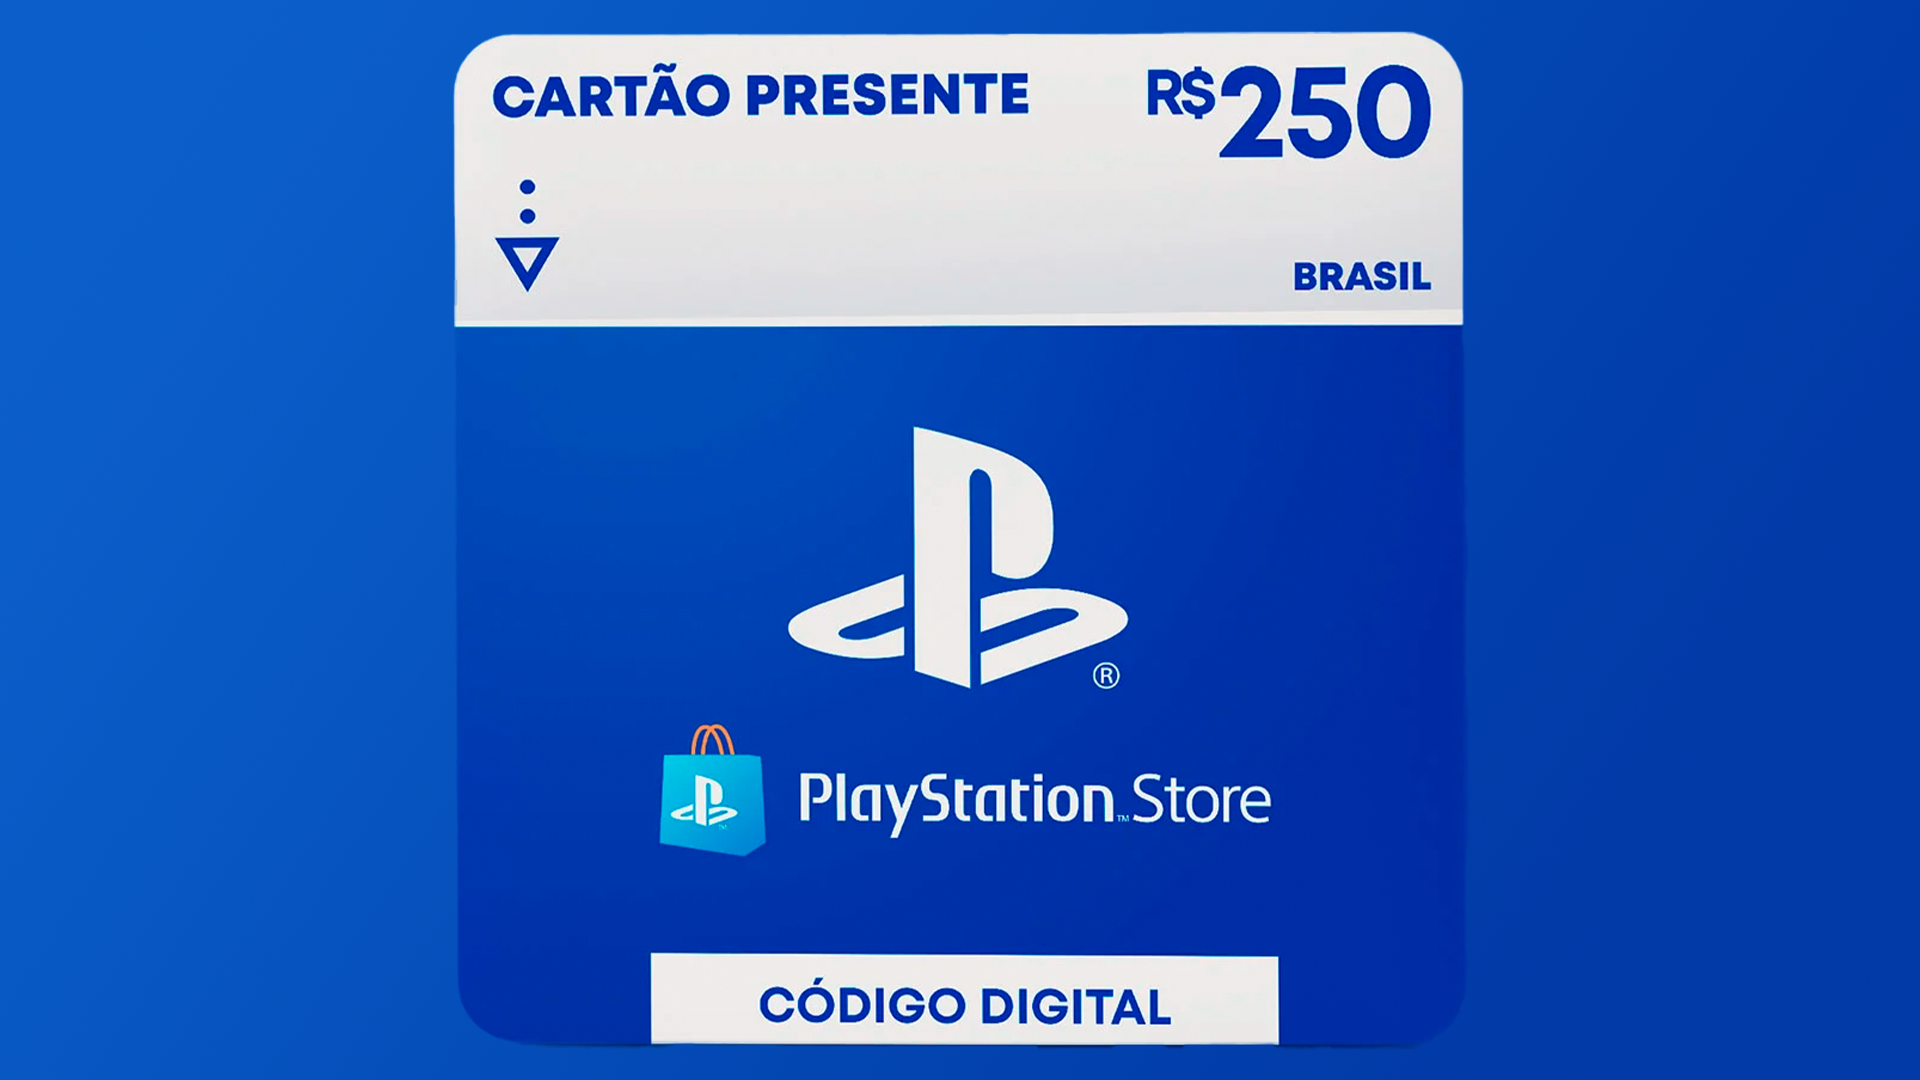 R$250 PlayStation Store - Cartão Presente Digital [Exclusivo Brasil]